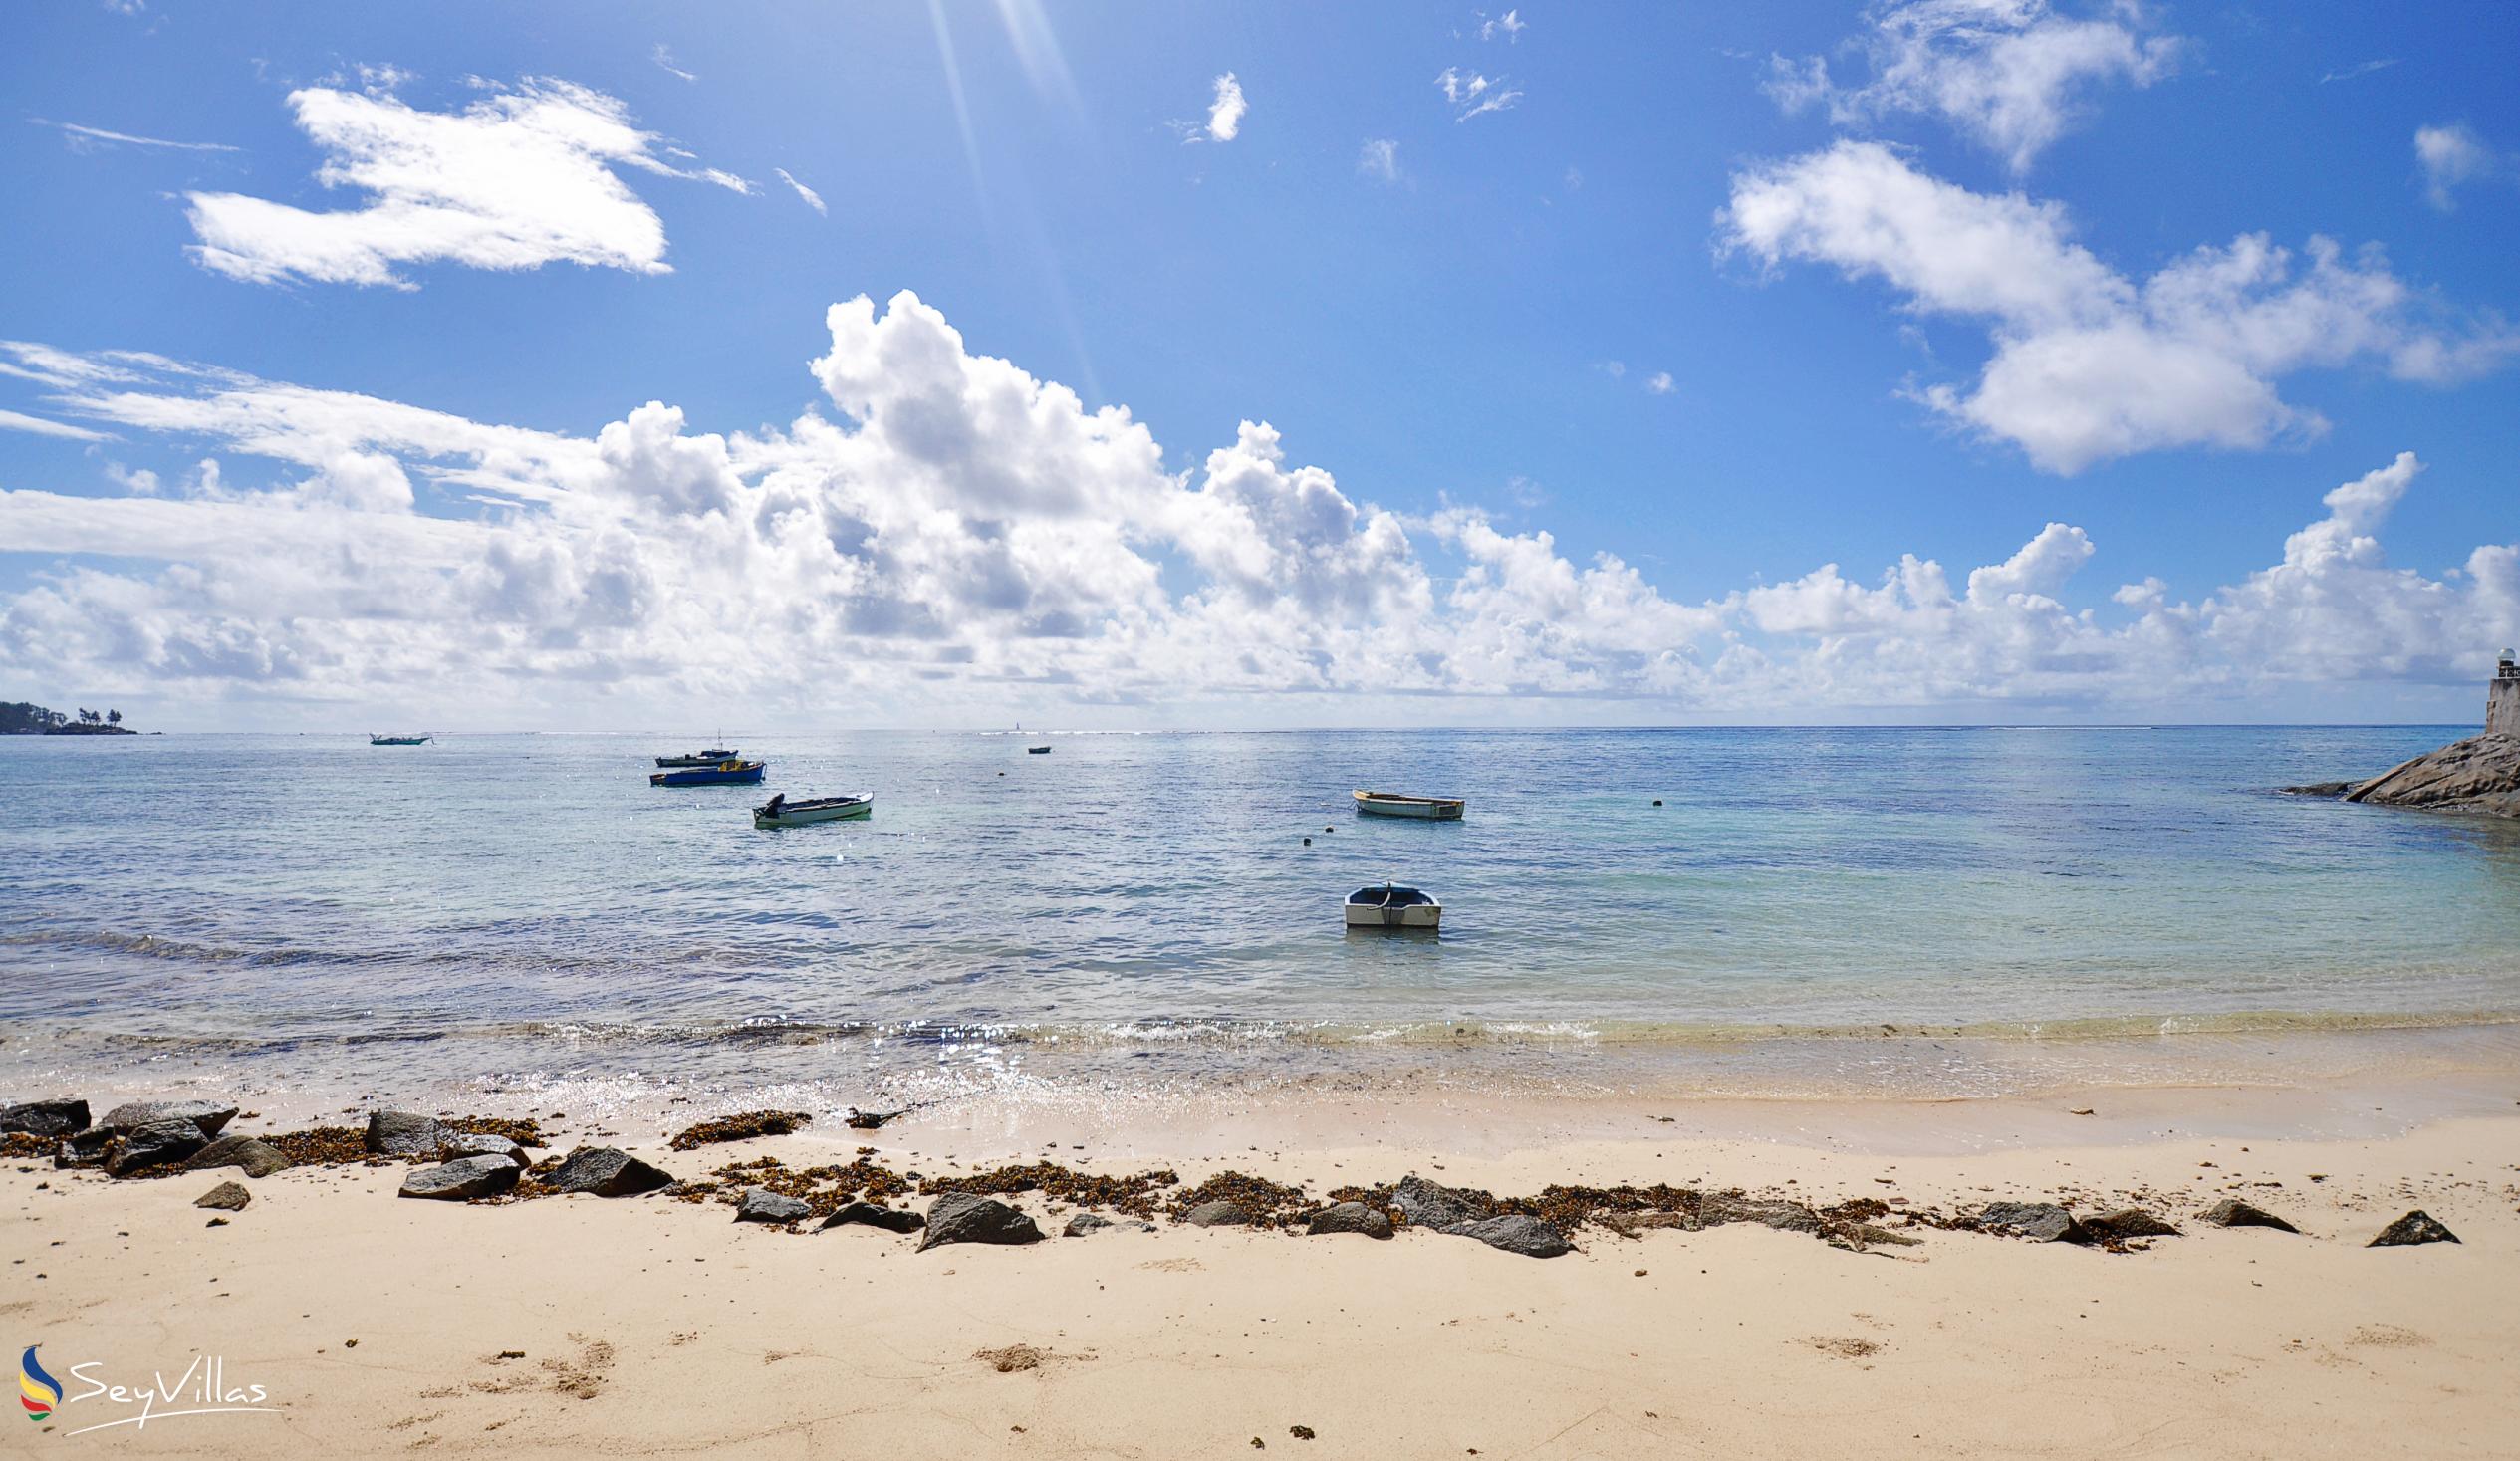 Photo 39: Coco Blanche - Beaches - Mahé (Seychelles)